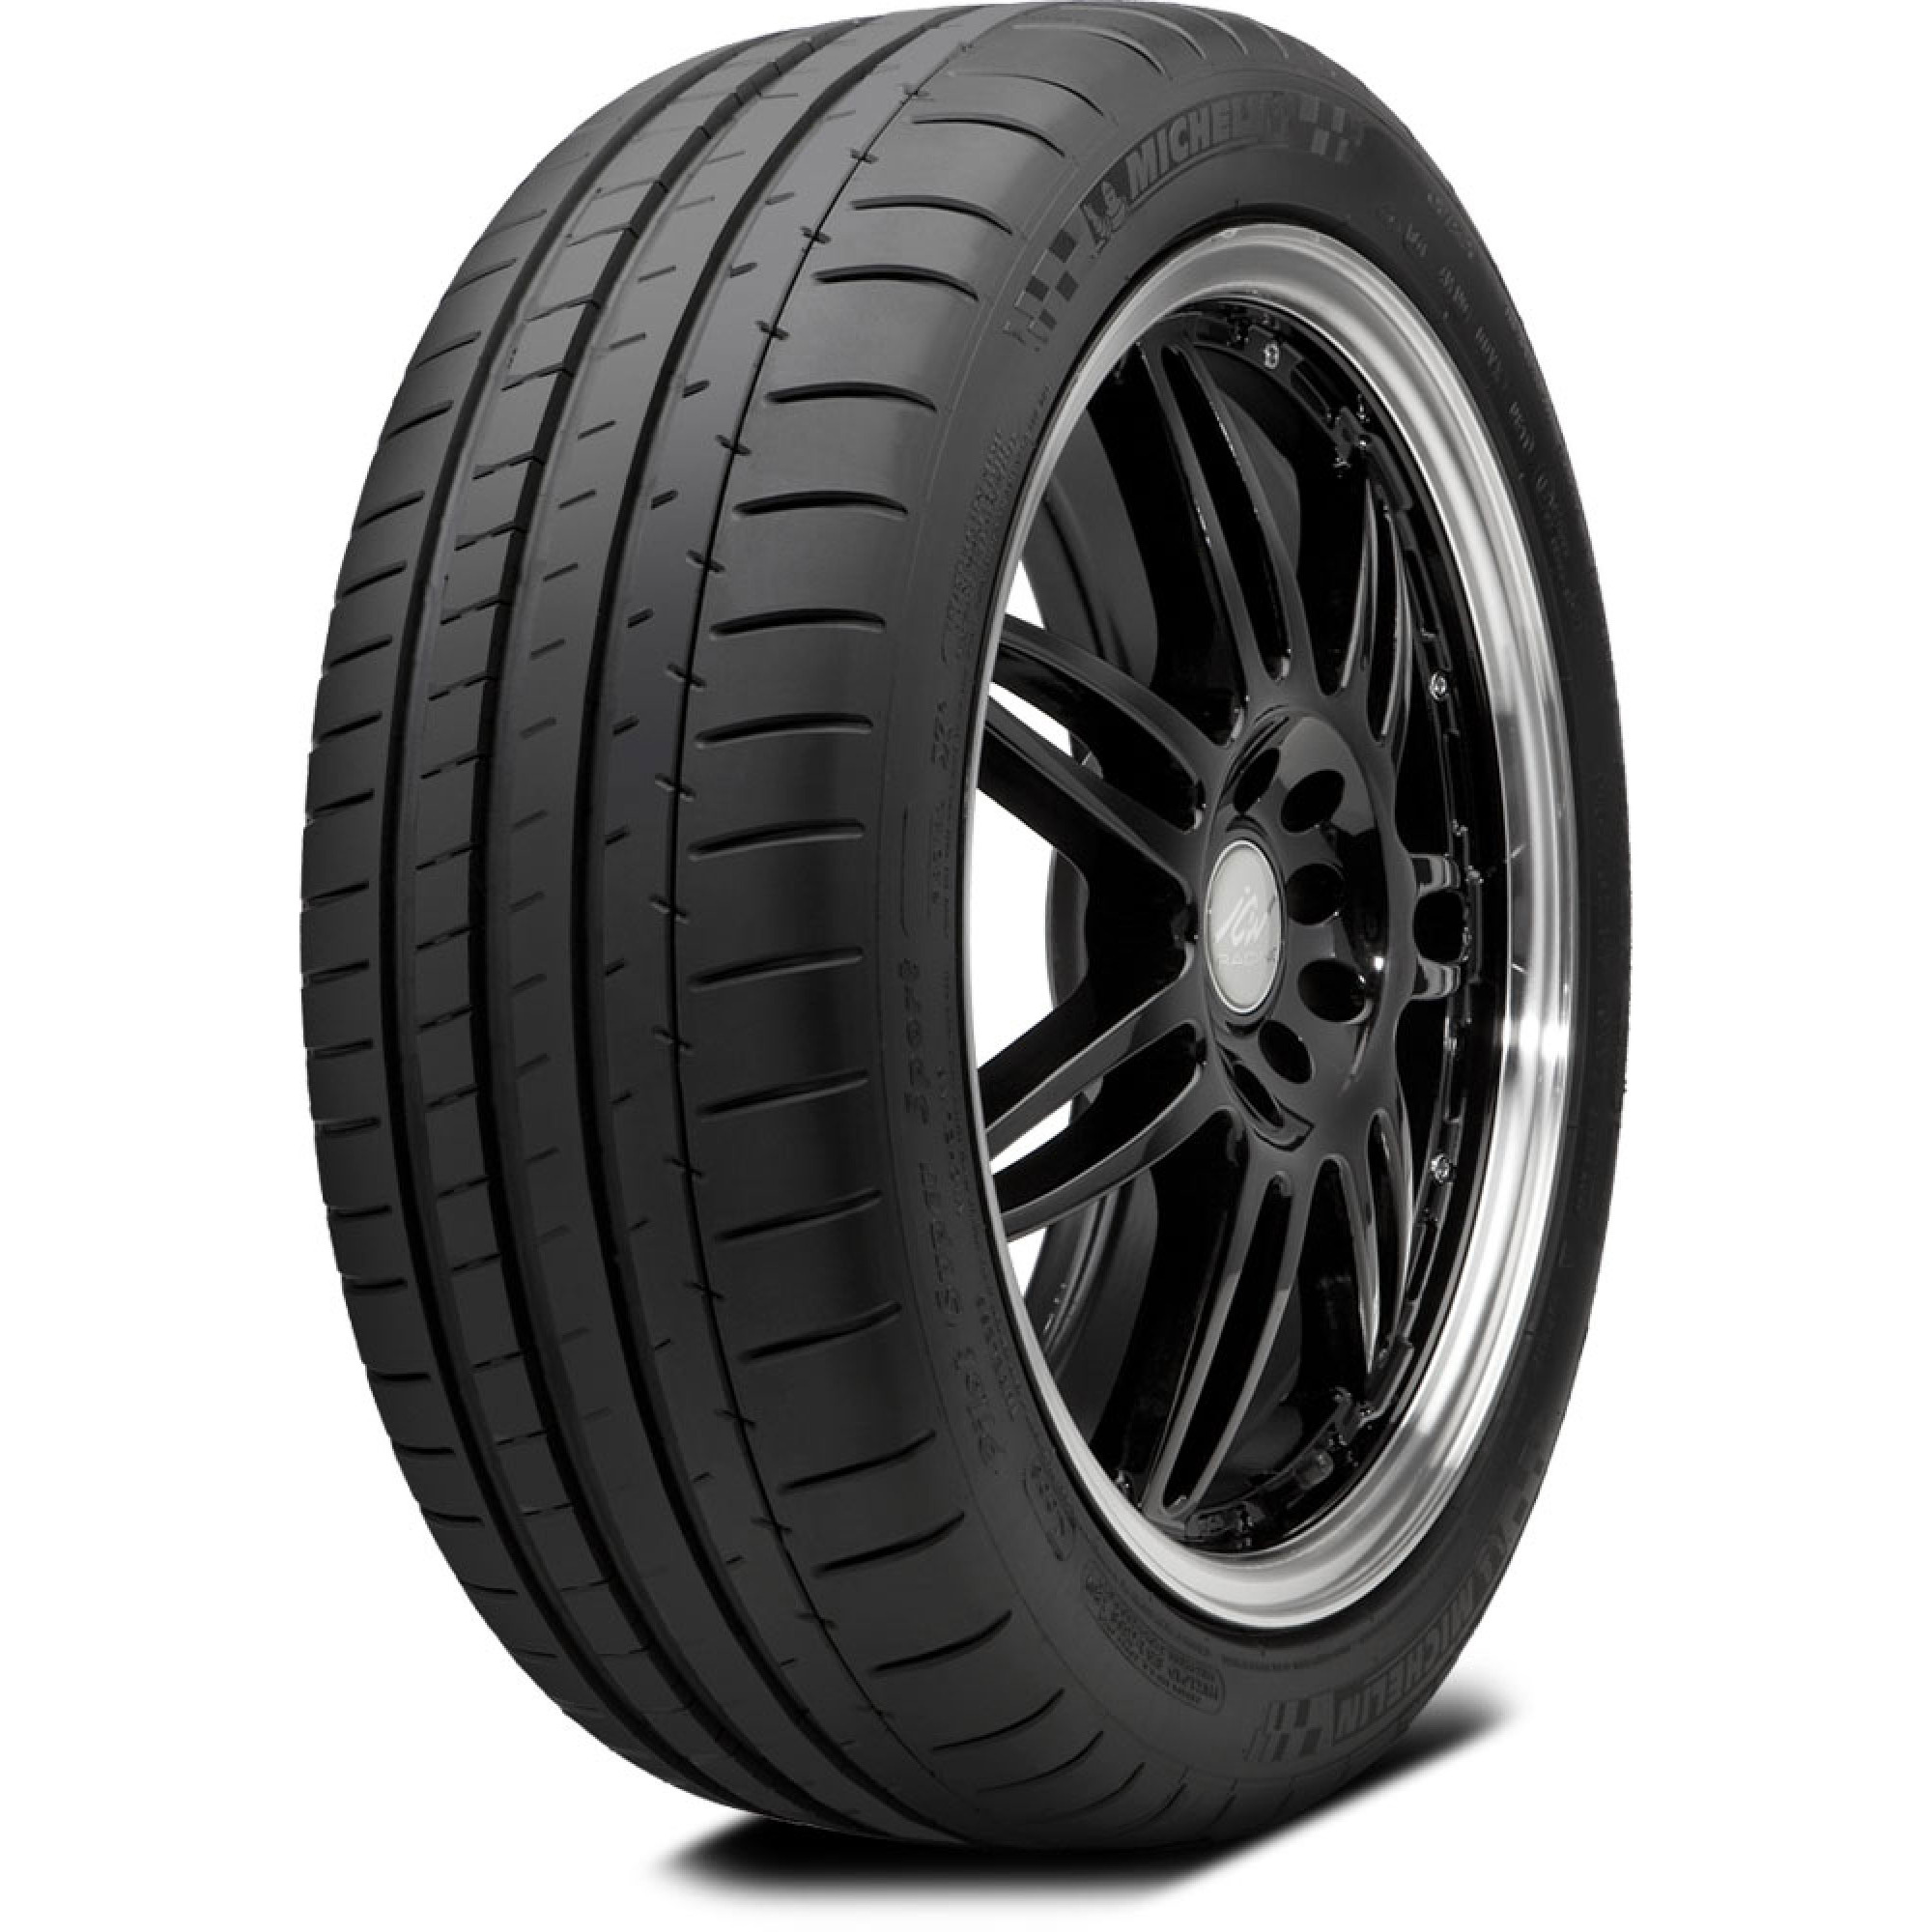 Michelin Pilot Super Sport | TireBuyer